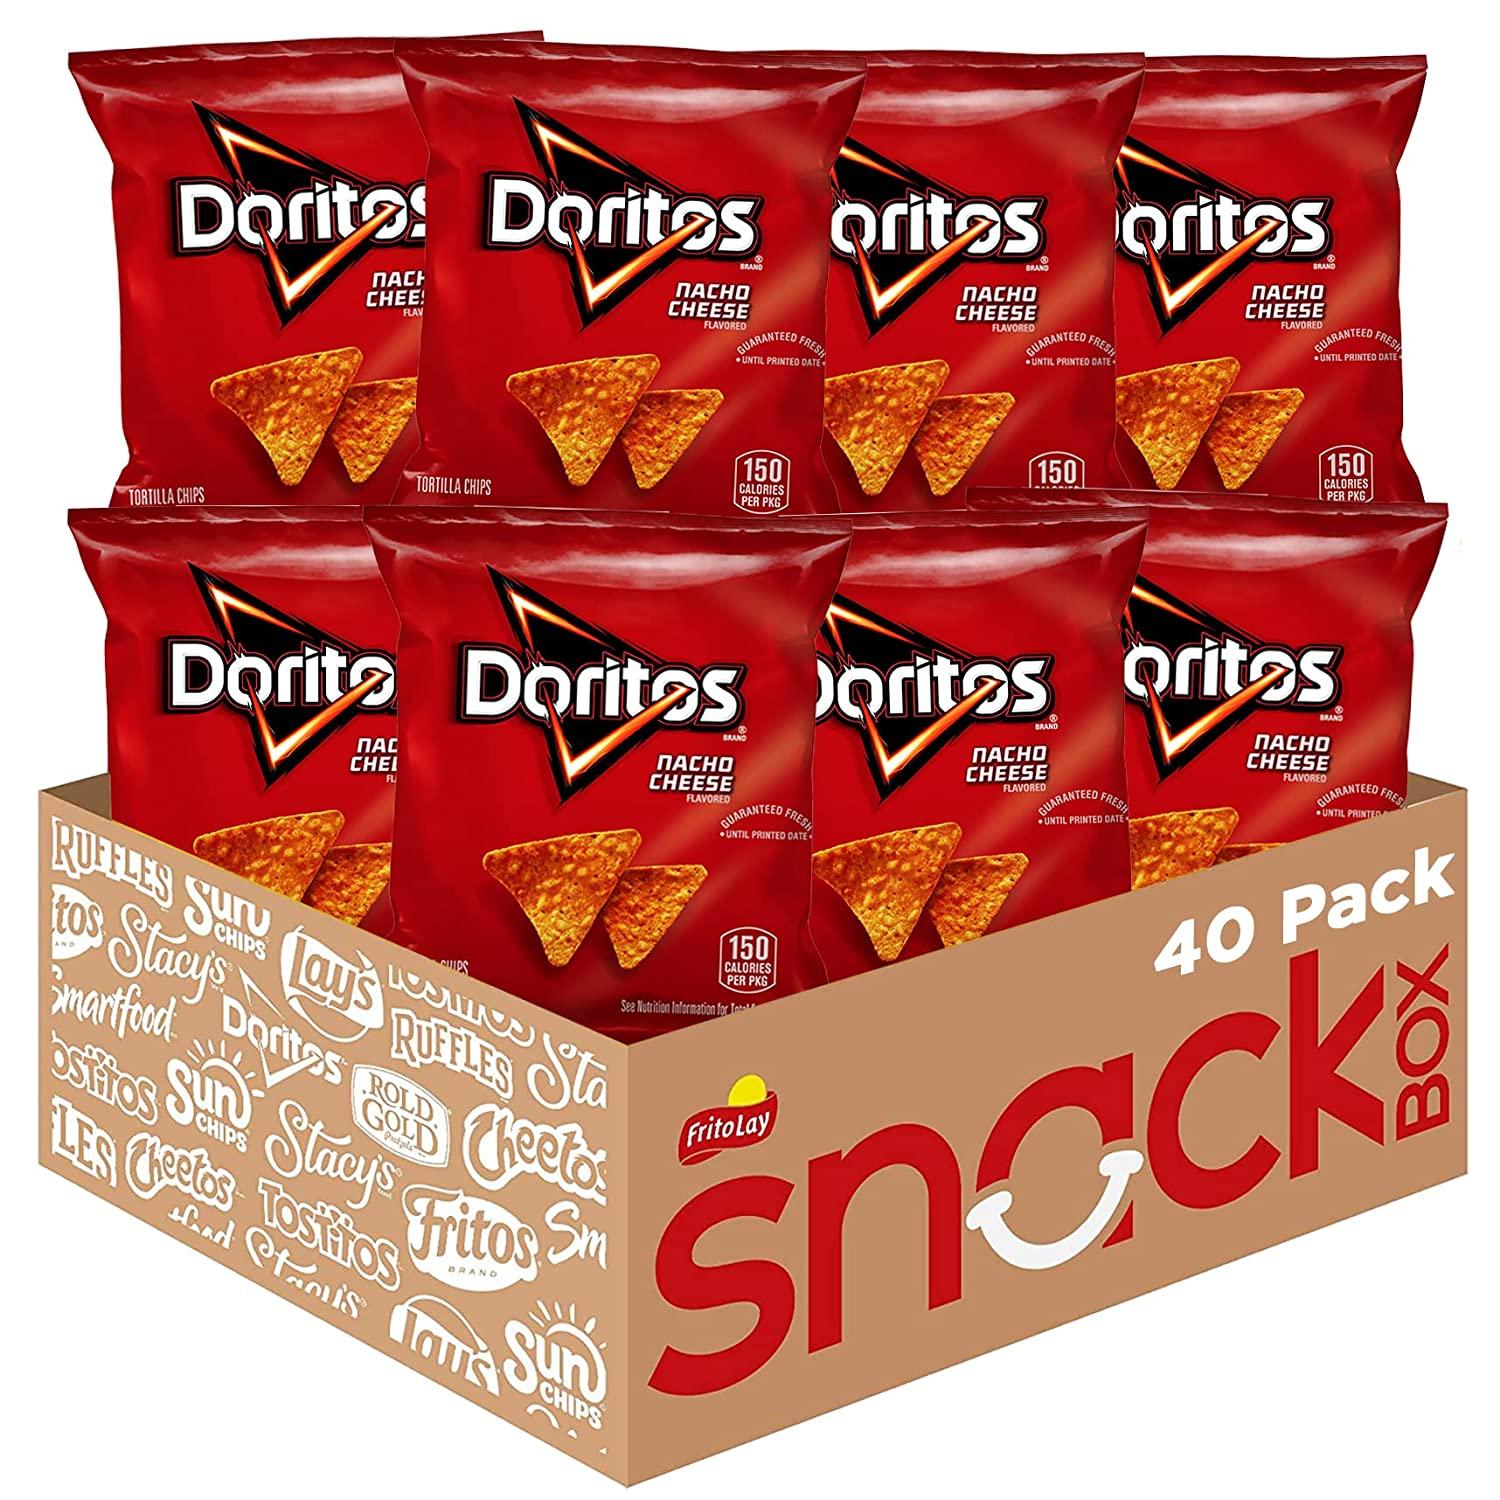 Doritos Nacho Cheese 40 Pack for $14.42 Shipped